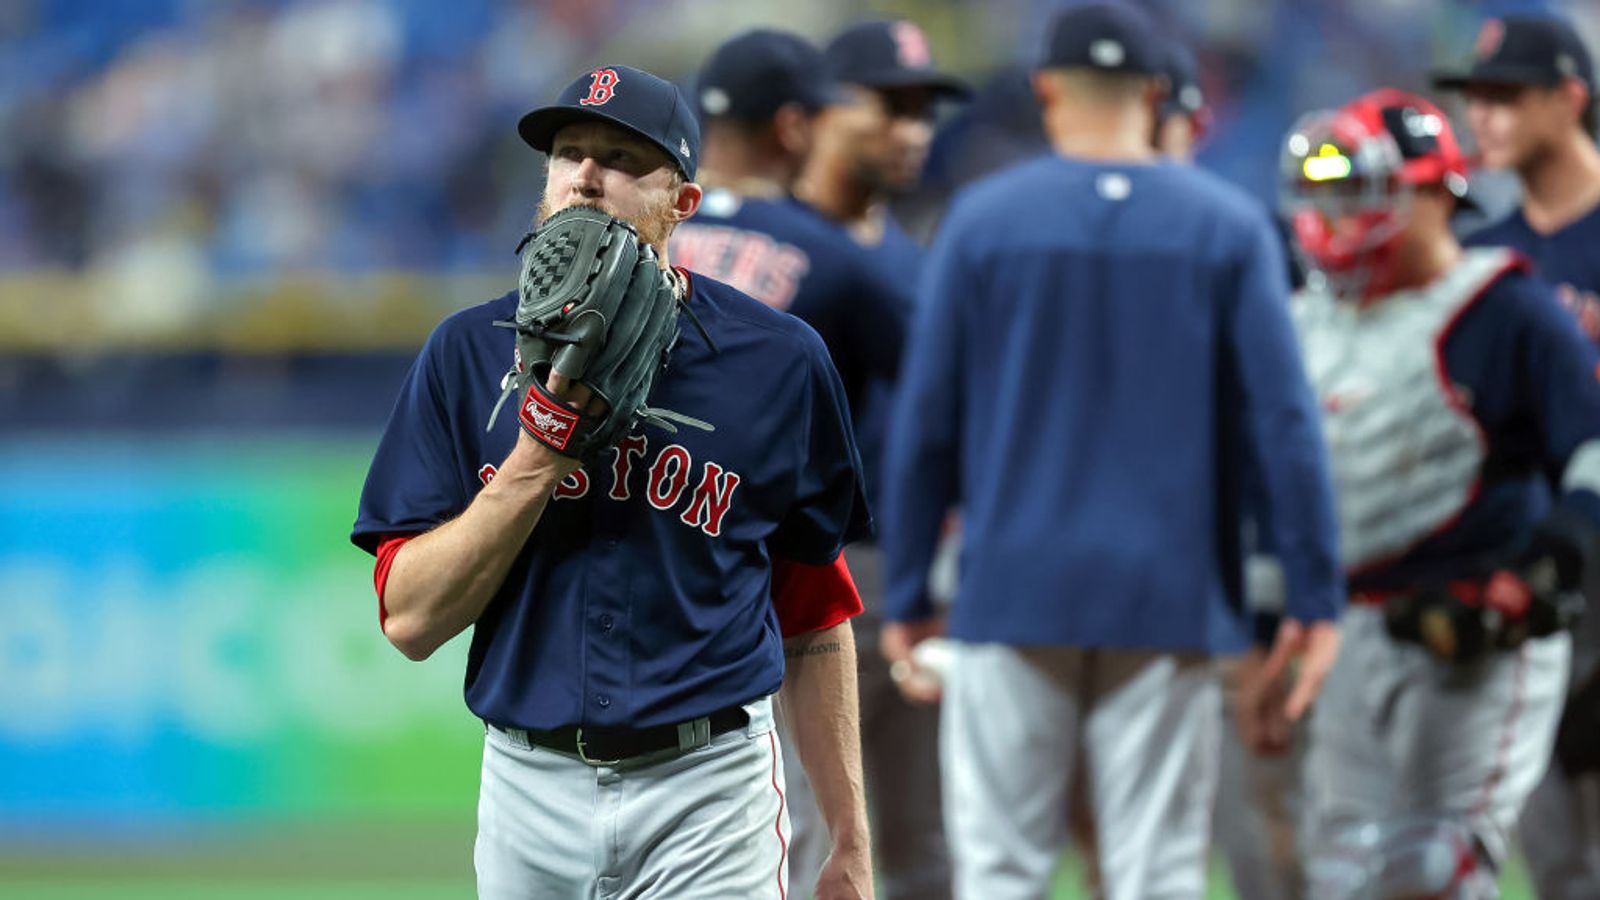 BSJ Game Report: Red Sox 4, Yankees 1 - Sox sweep the Yankees